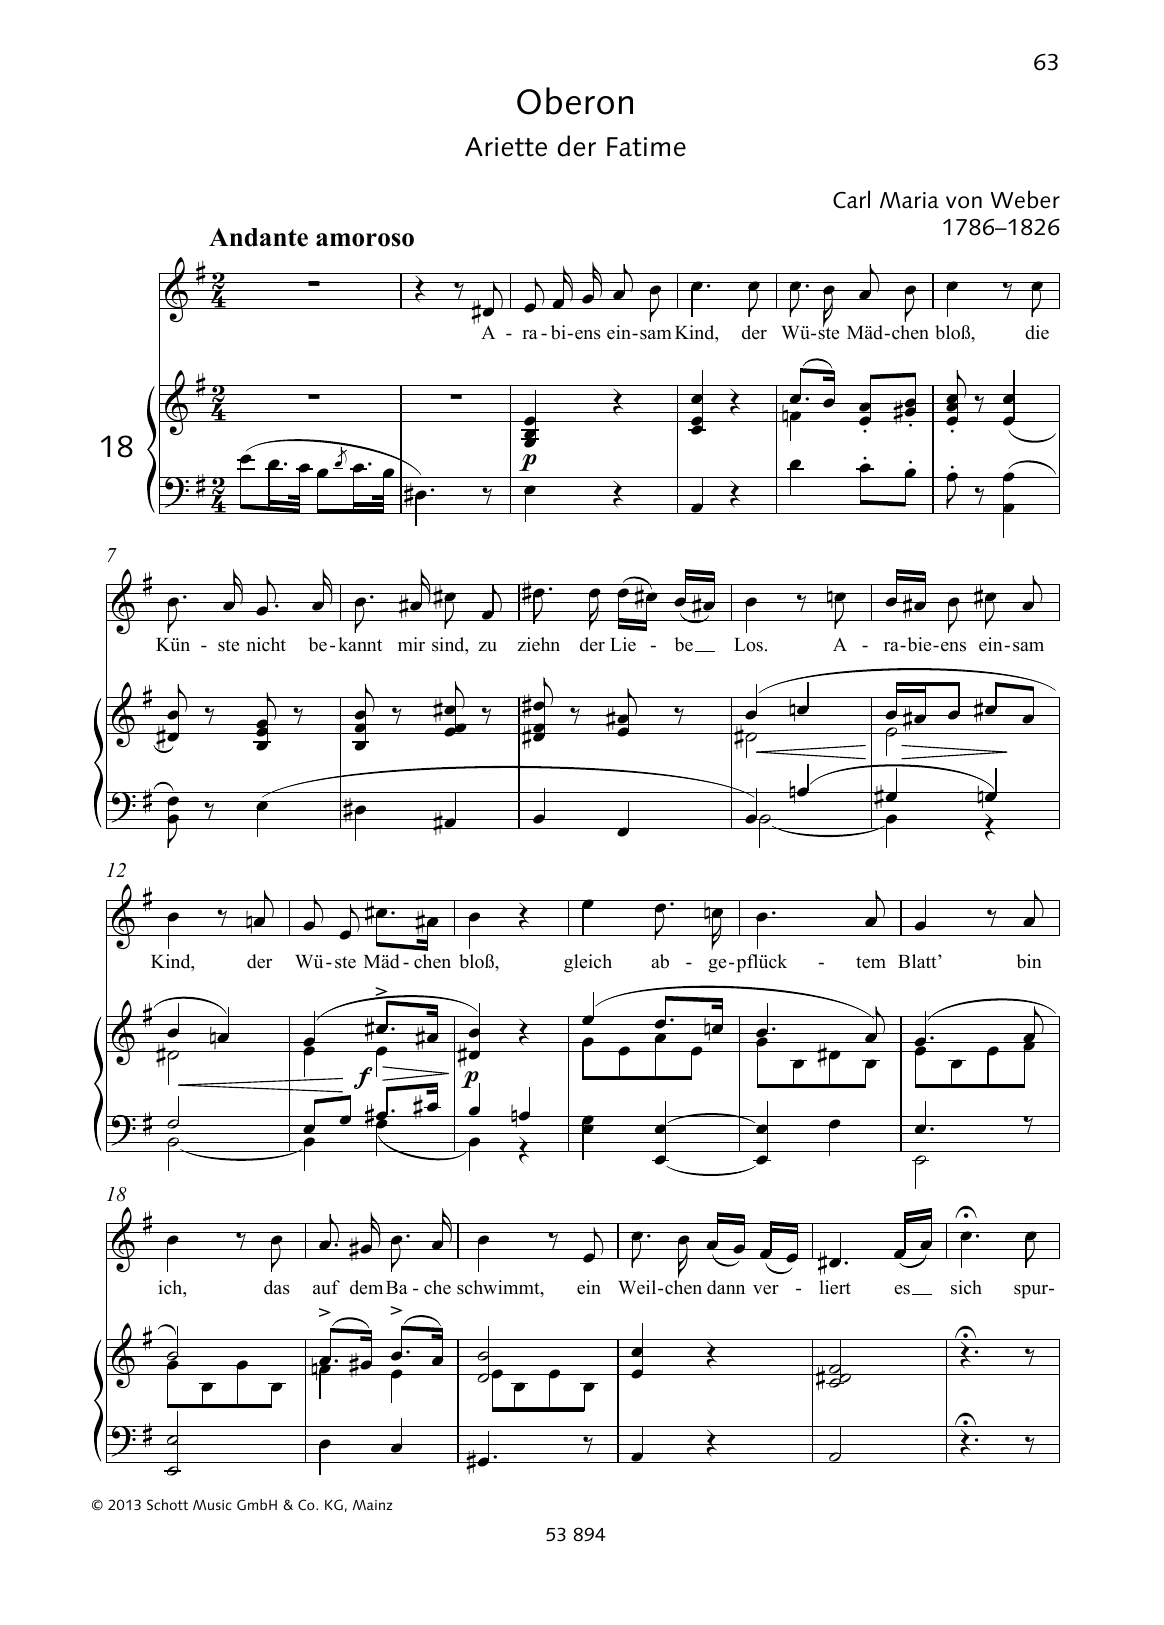 Carl Maria von Weber Arabiens einsam Kind Sheet Music Notes & Chords for Piano & Vocal - Download or Print PDF